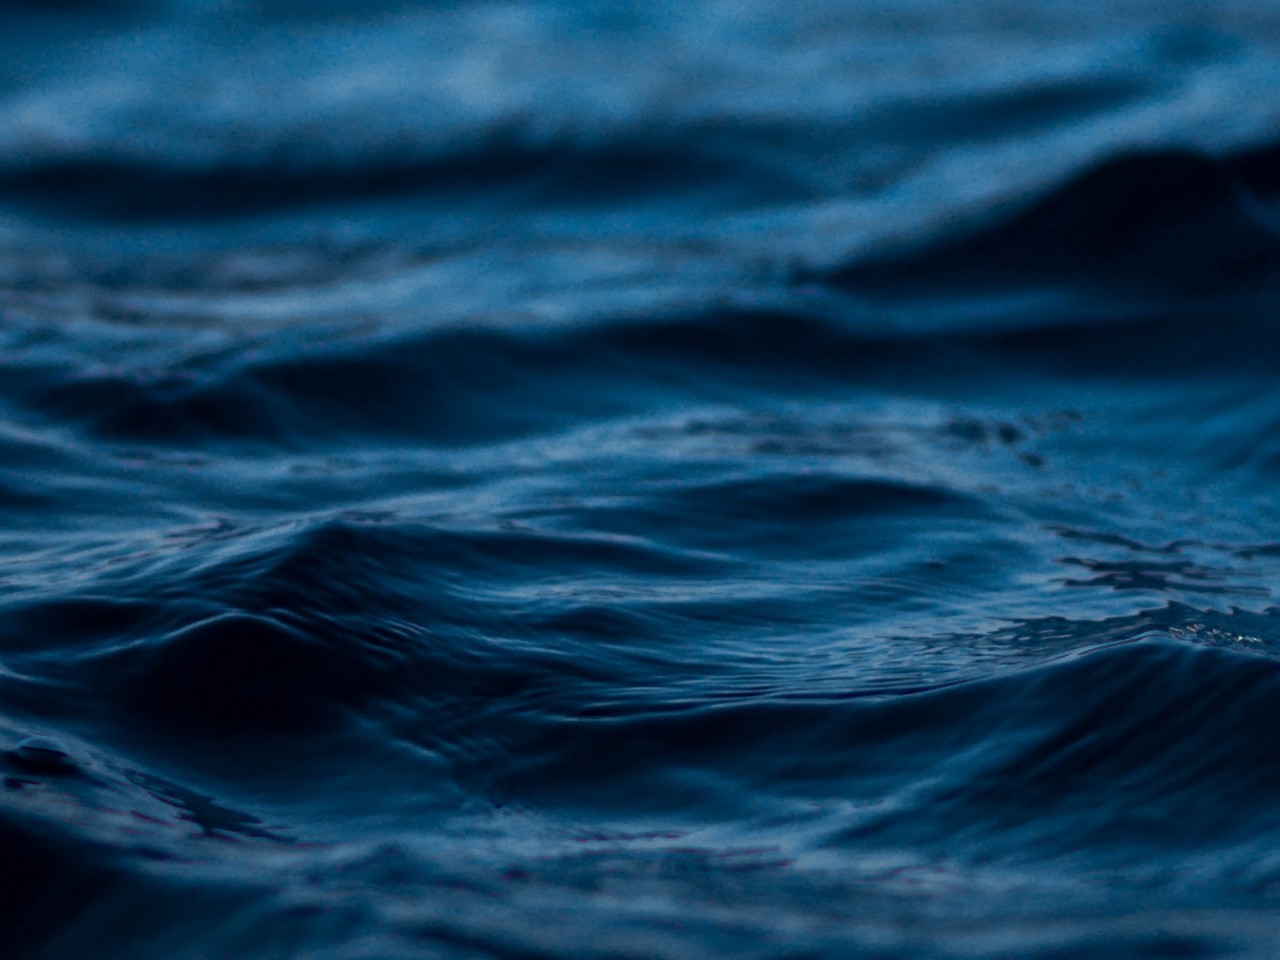 Wave ripples in blue water HD Wallpaper